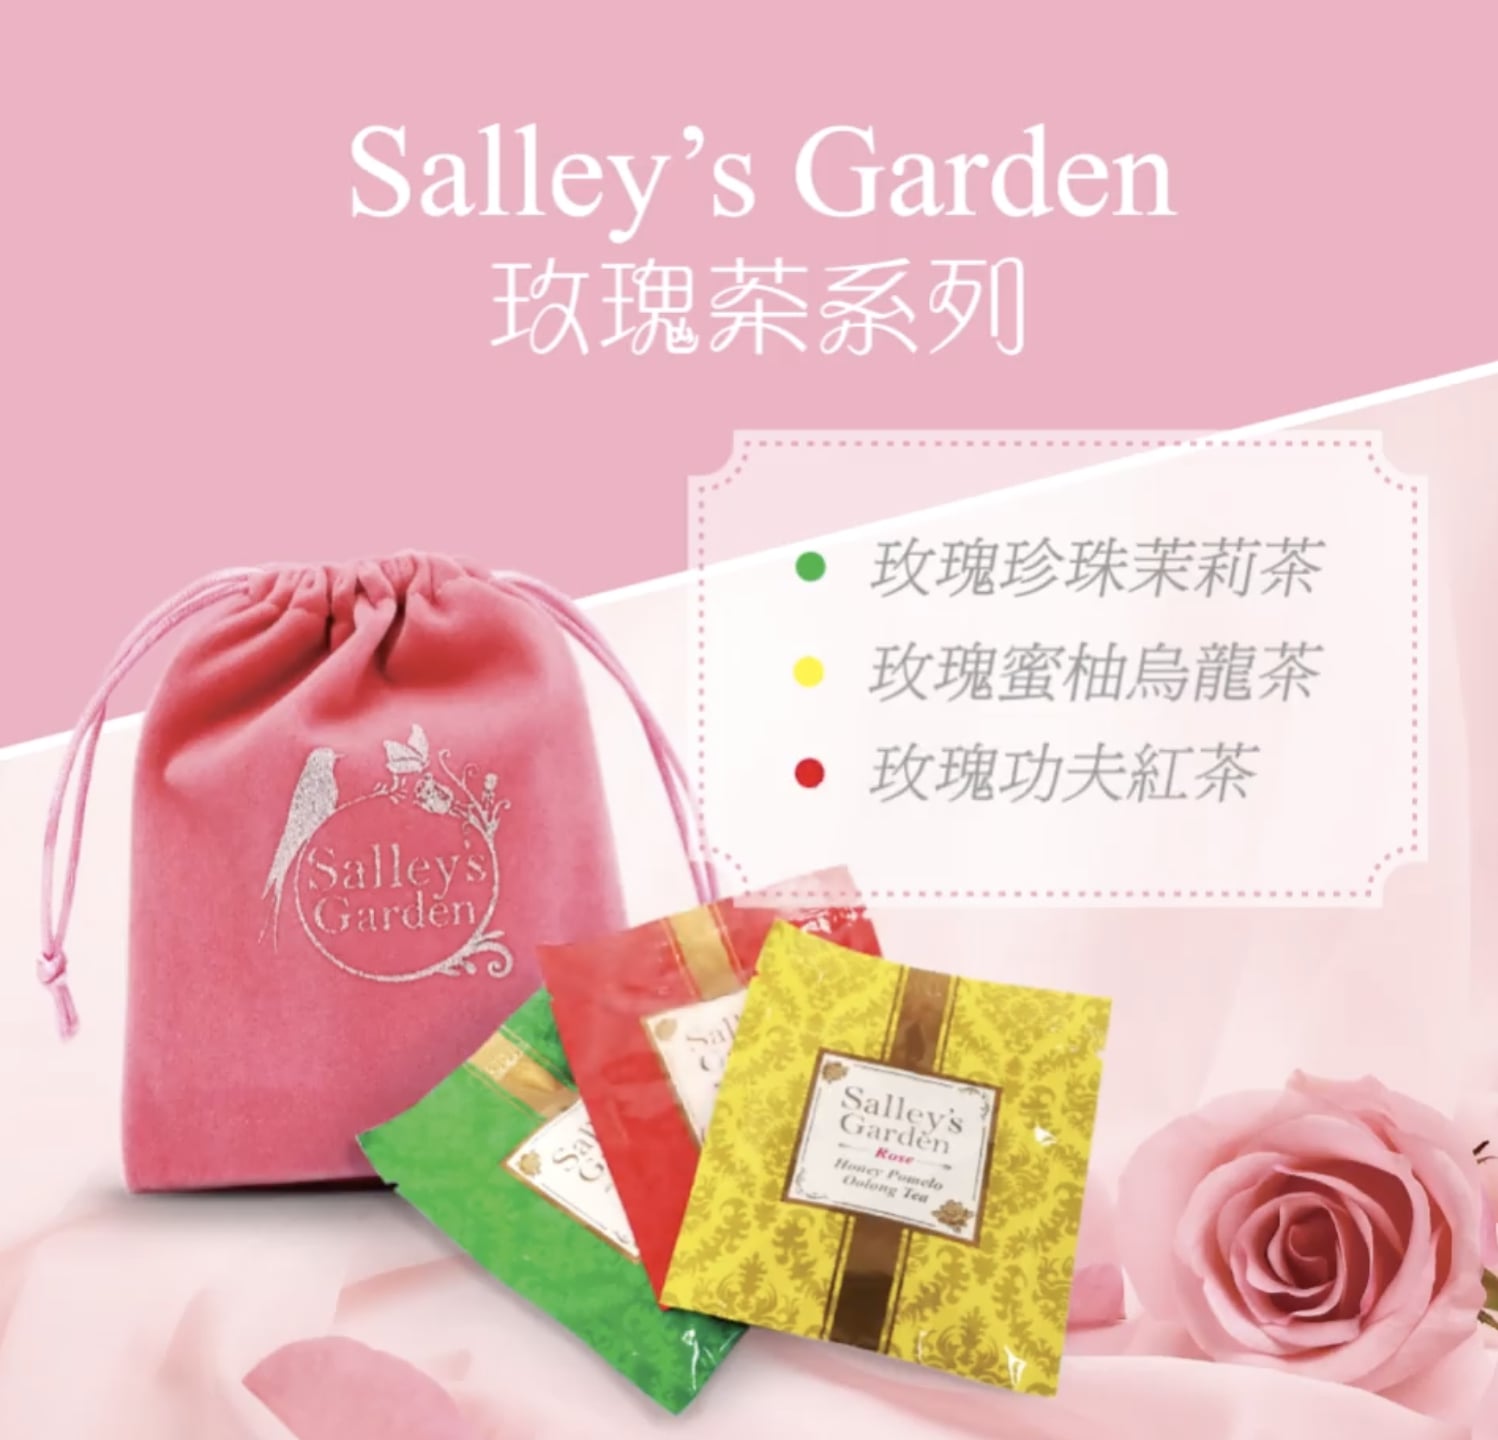 Salley’s Garden 有獎遊戲送 100份「玫瑰中國茶系列」試飲禮品包